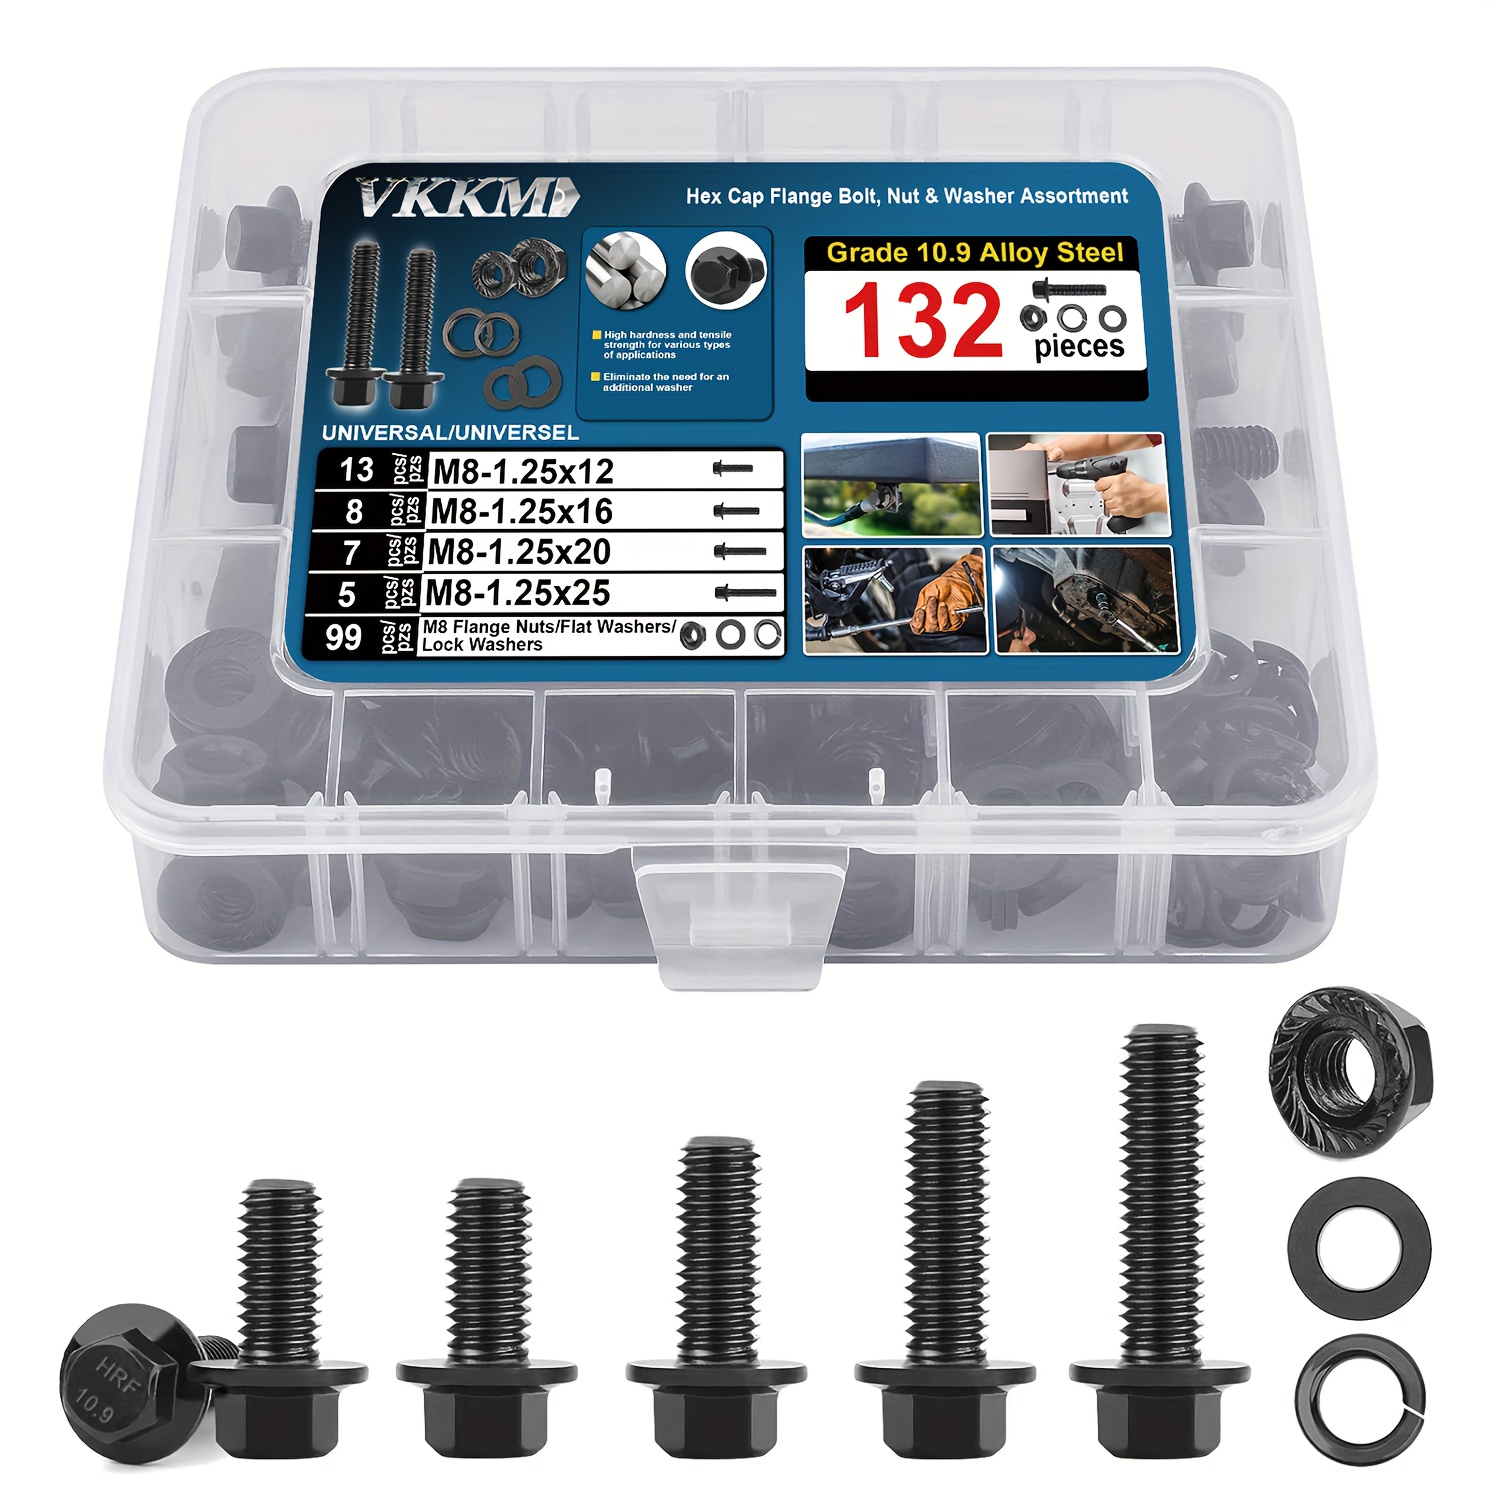 

132 Pcs M8 Hex Cap Flange Bolt Assortment Kit/screws, Nuts & Washers/black Oxide, M8-1.25 X 12/16/20/25mm, Reusable Storage Case With Adjustable Dividers